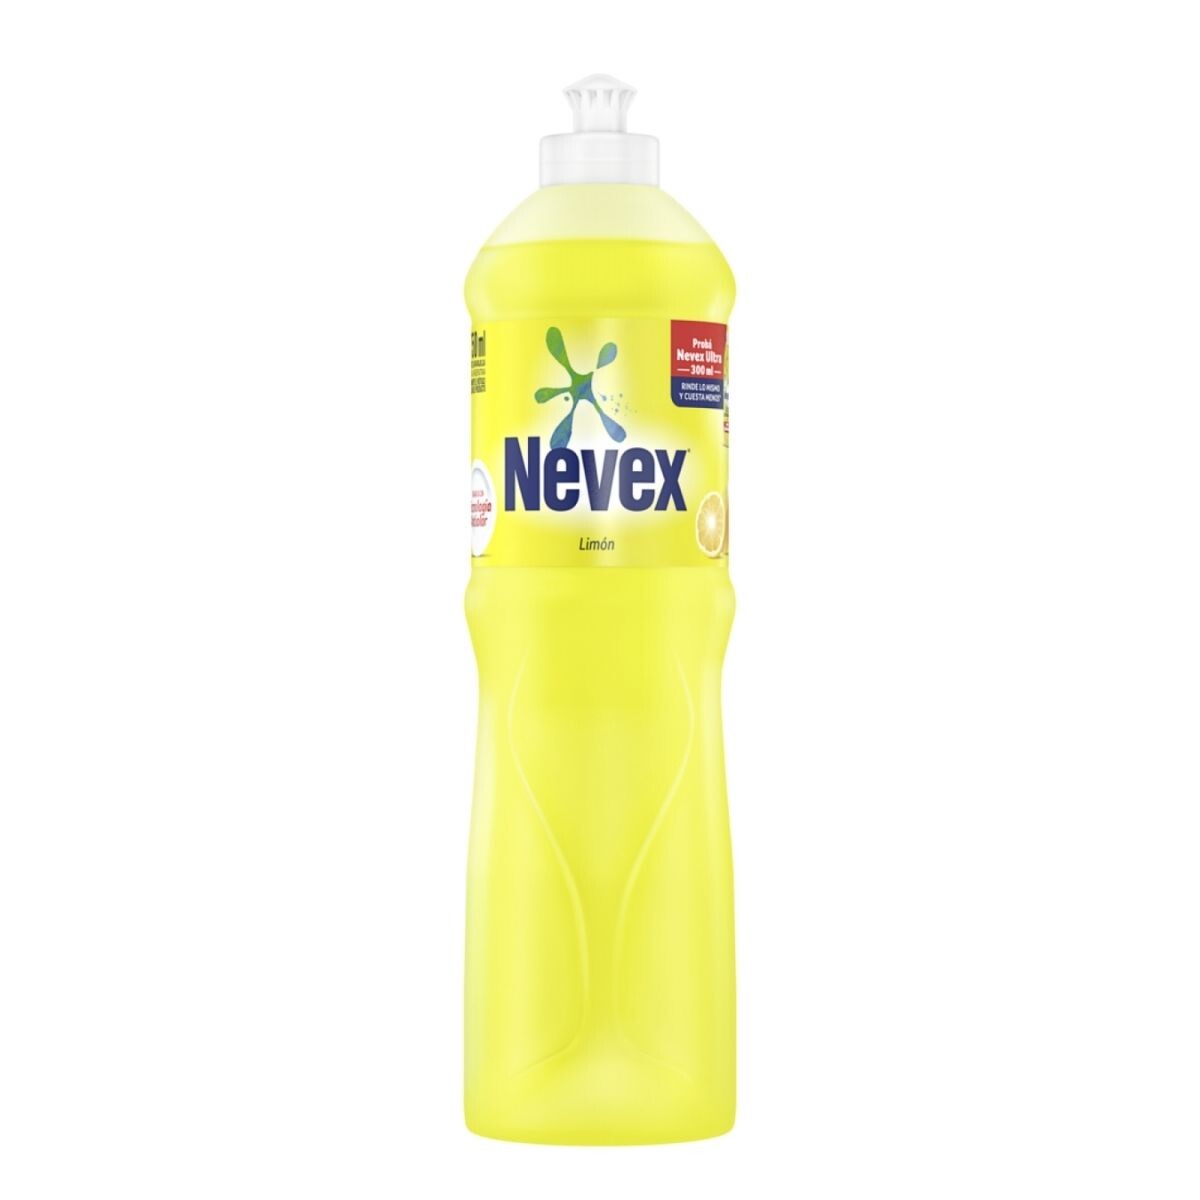 Detergente Líquido Nevex Hurra Limón - 1.25 LT 